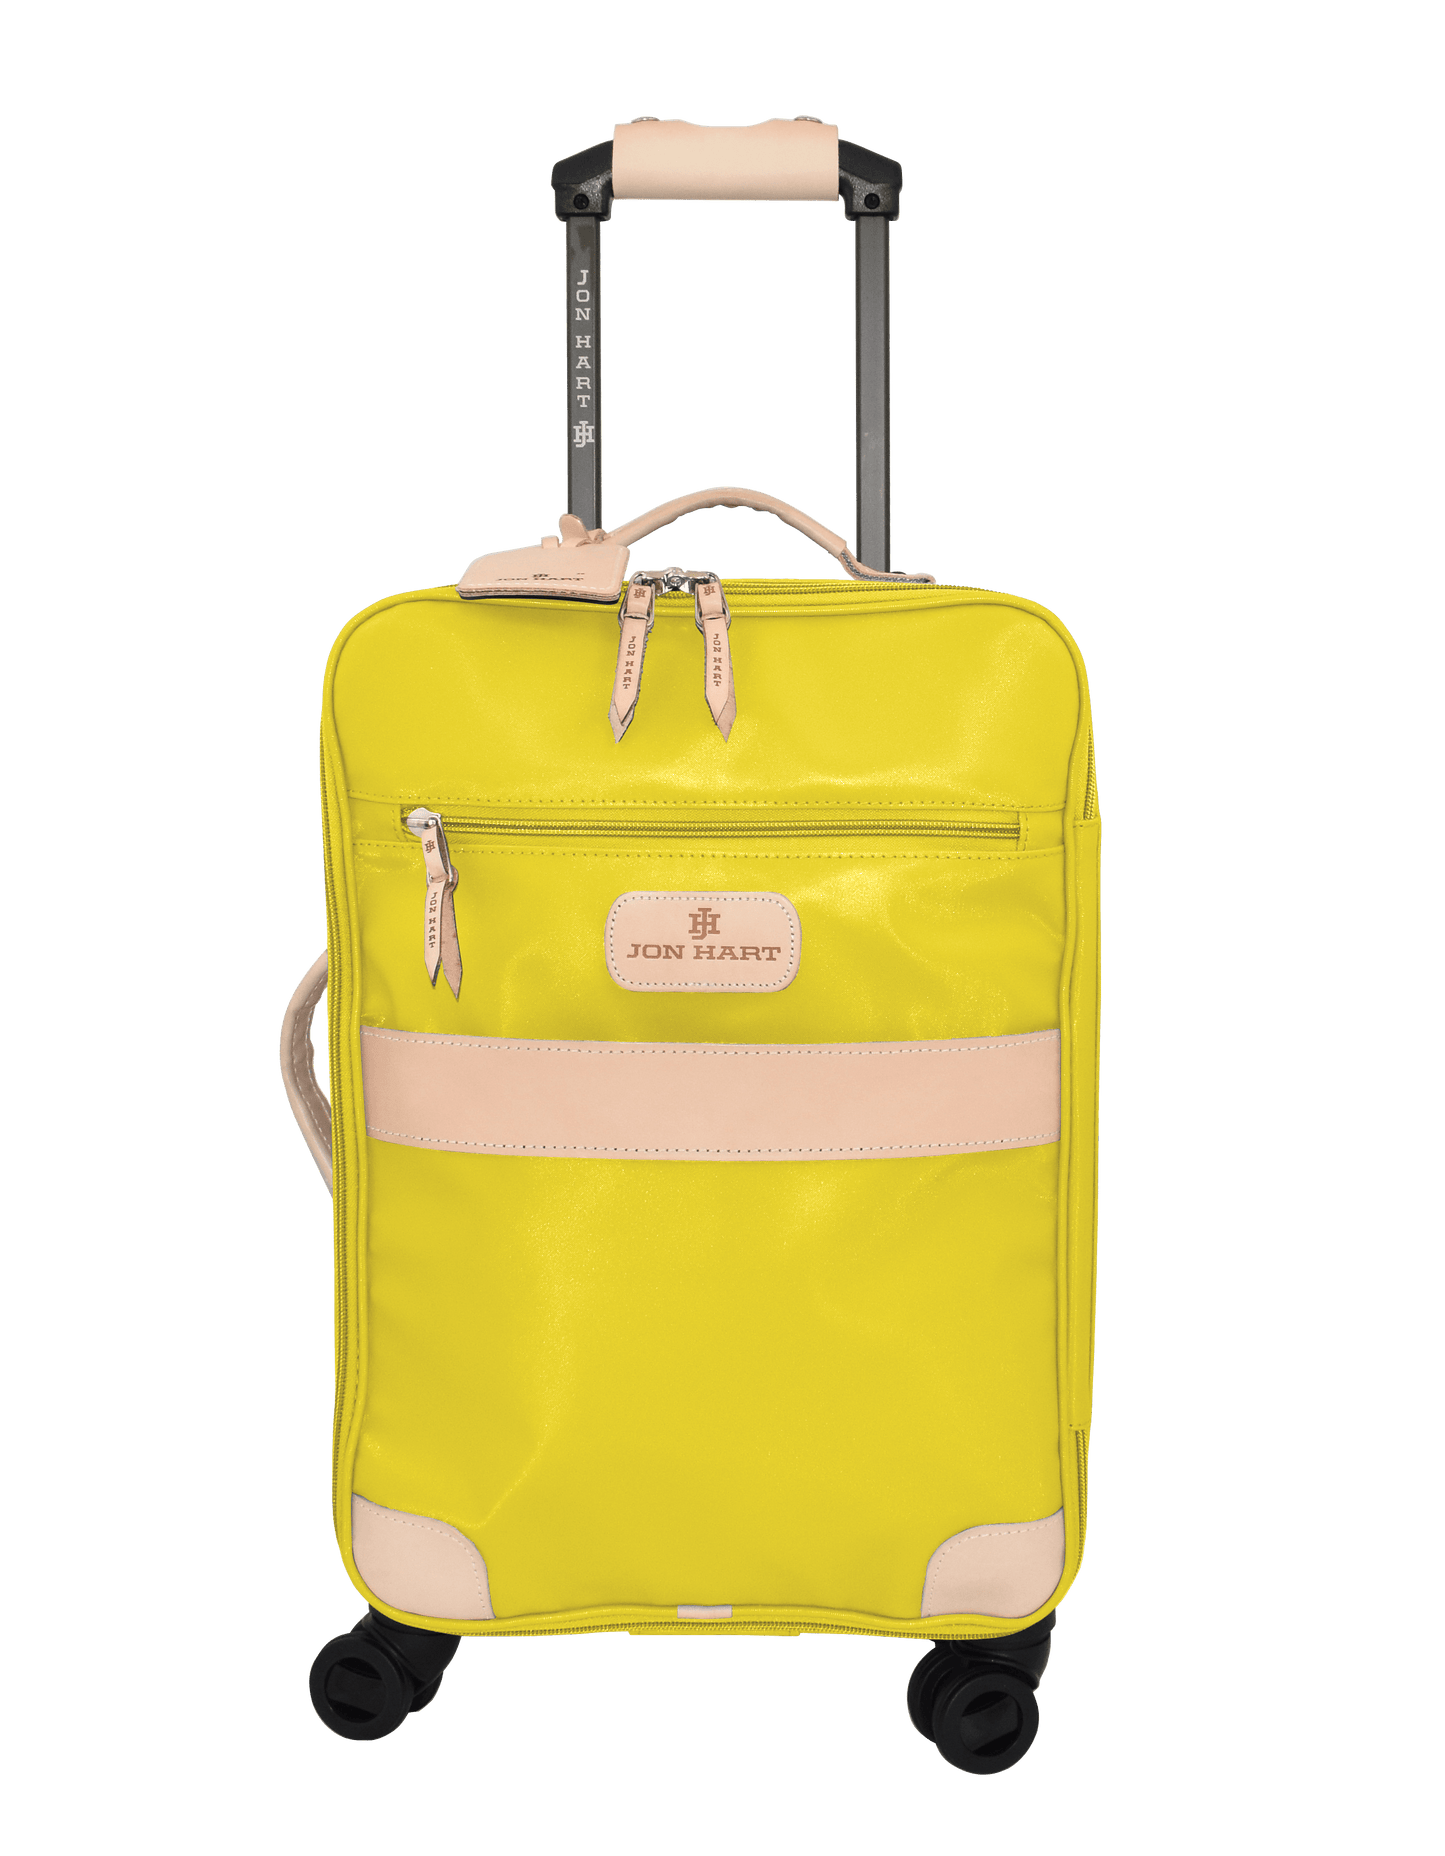 Jon Hart Wheels Luggage (360) Carry On (Redesigned)